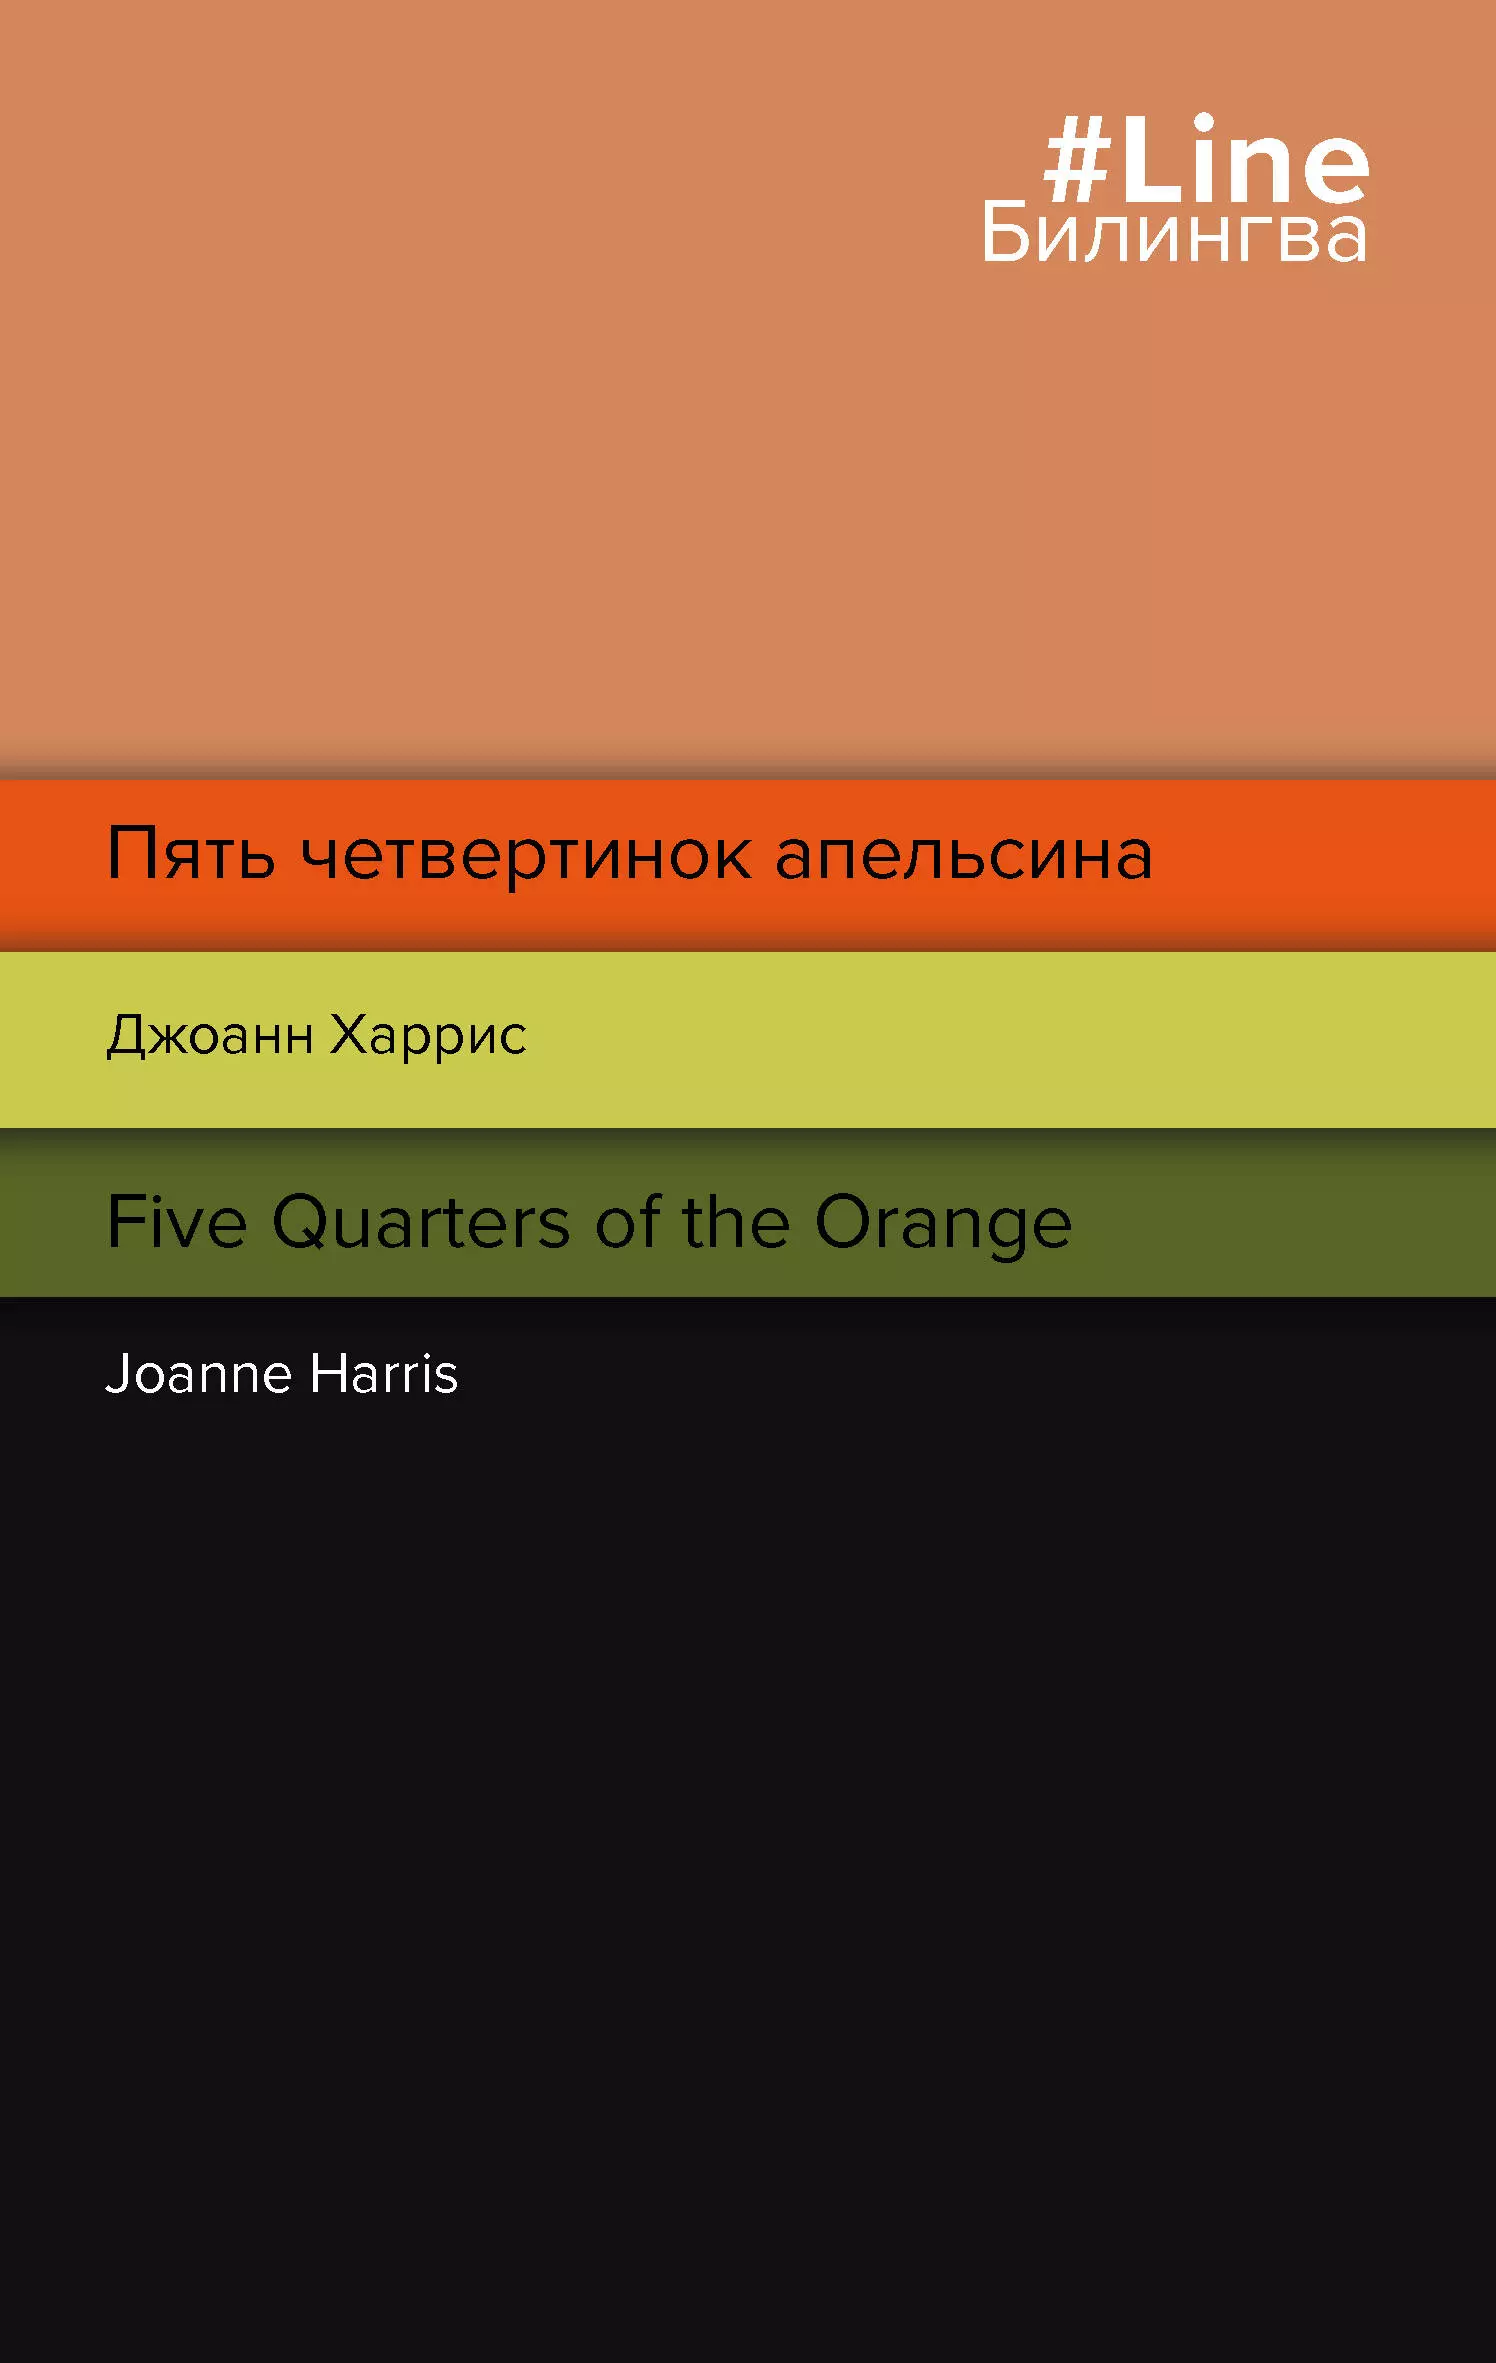 Харрис Джоанн - Пять четвертинок апельсина. Five Quarters of the Orange